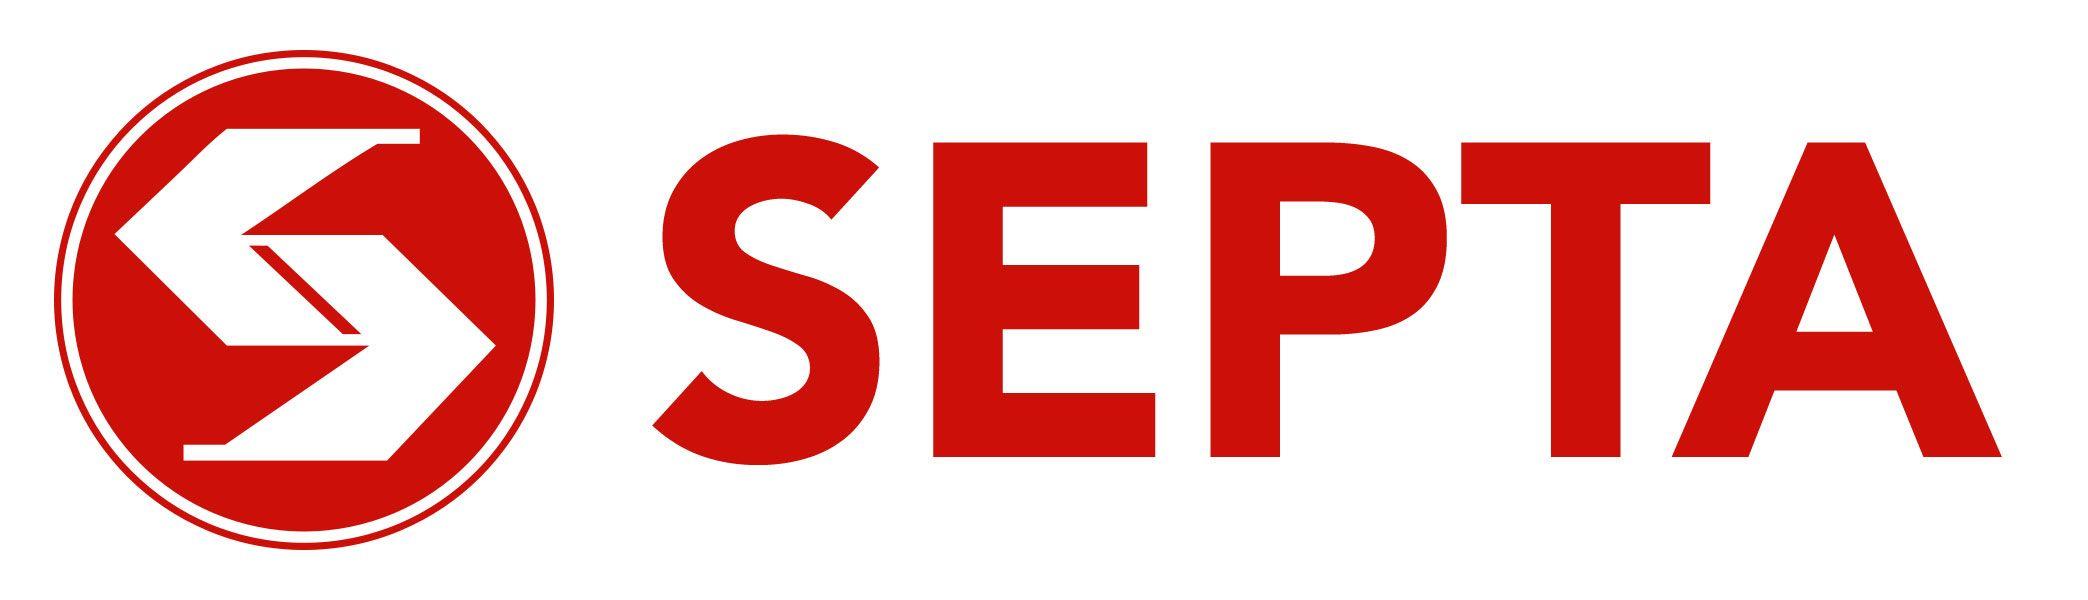 SEPTA Logo - Septa Logos